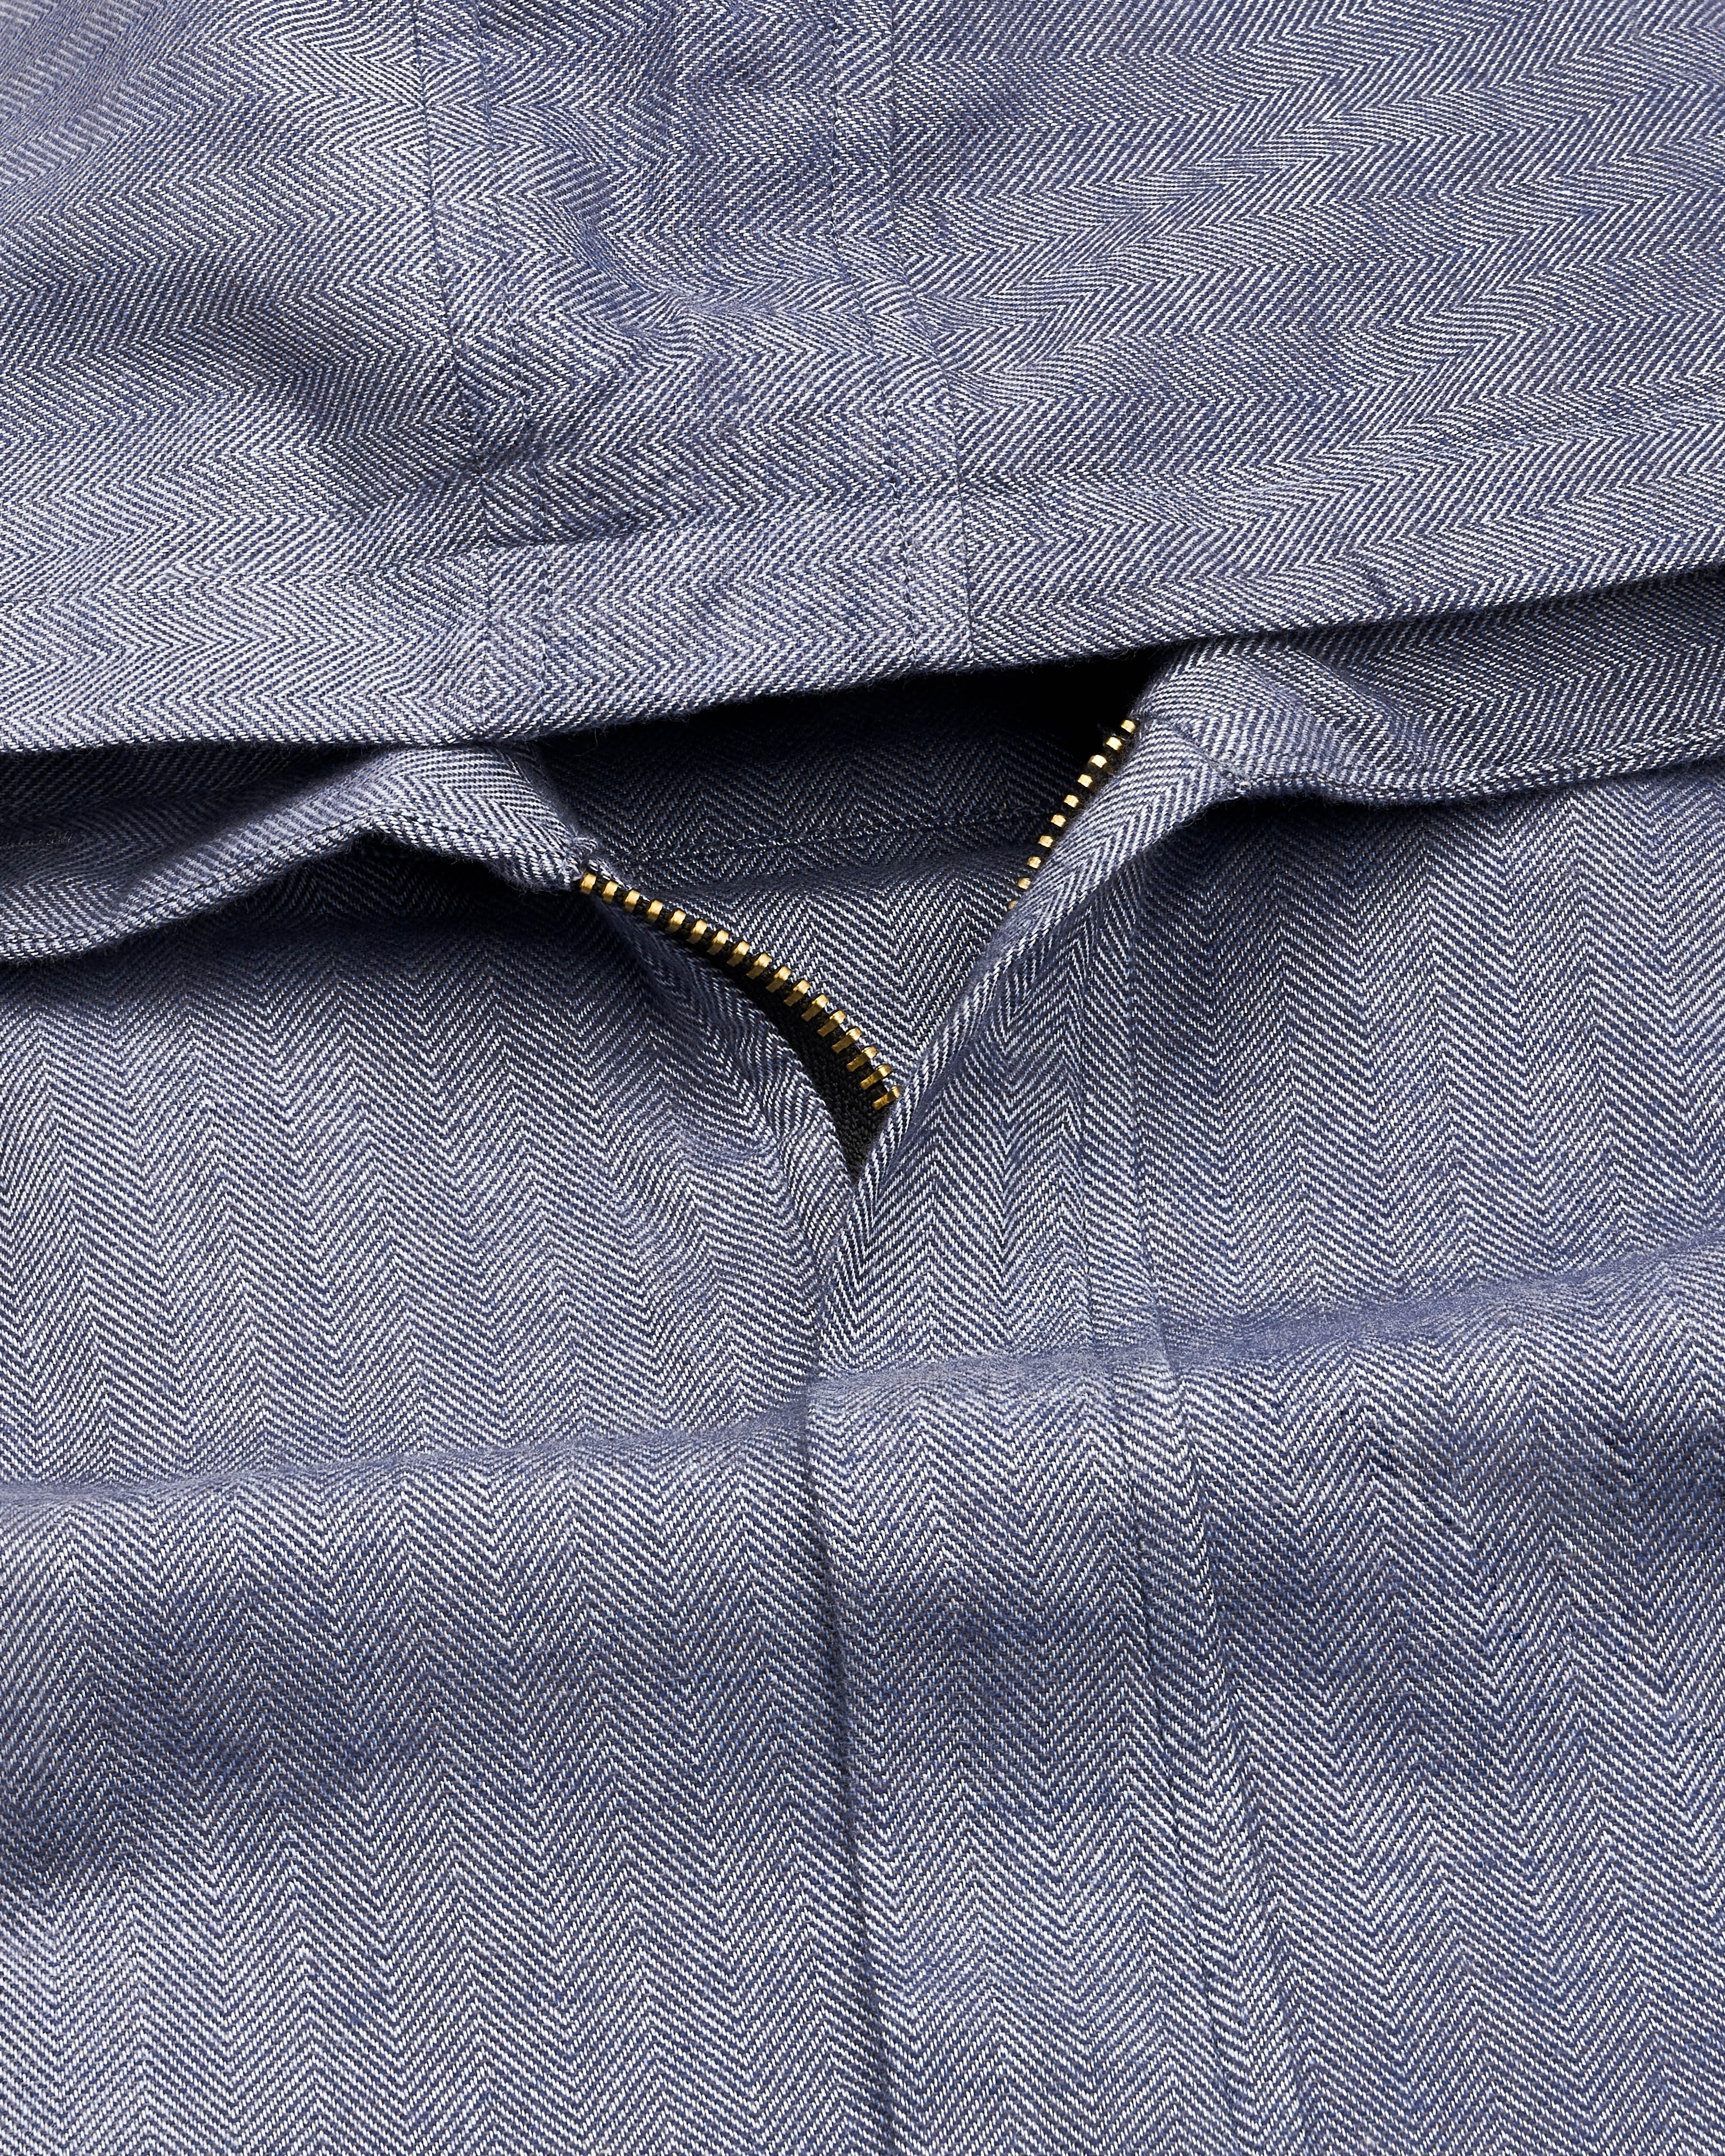 Waterloo Gray and Black Royal Oxford Designer Hoodie Shirt with Zipper Closure